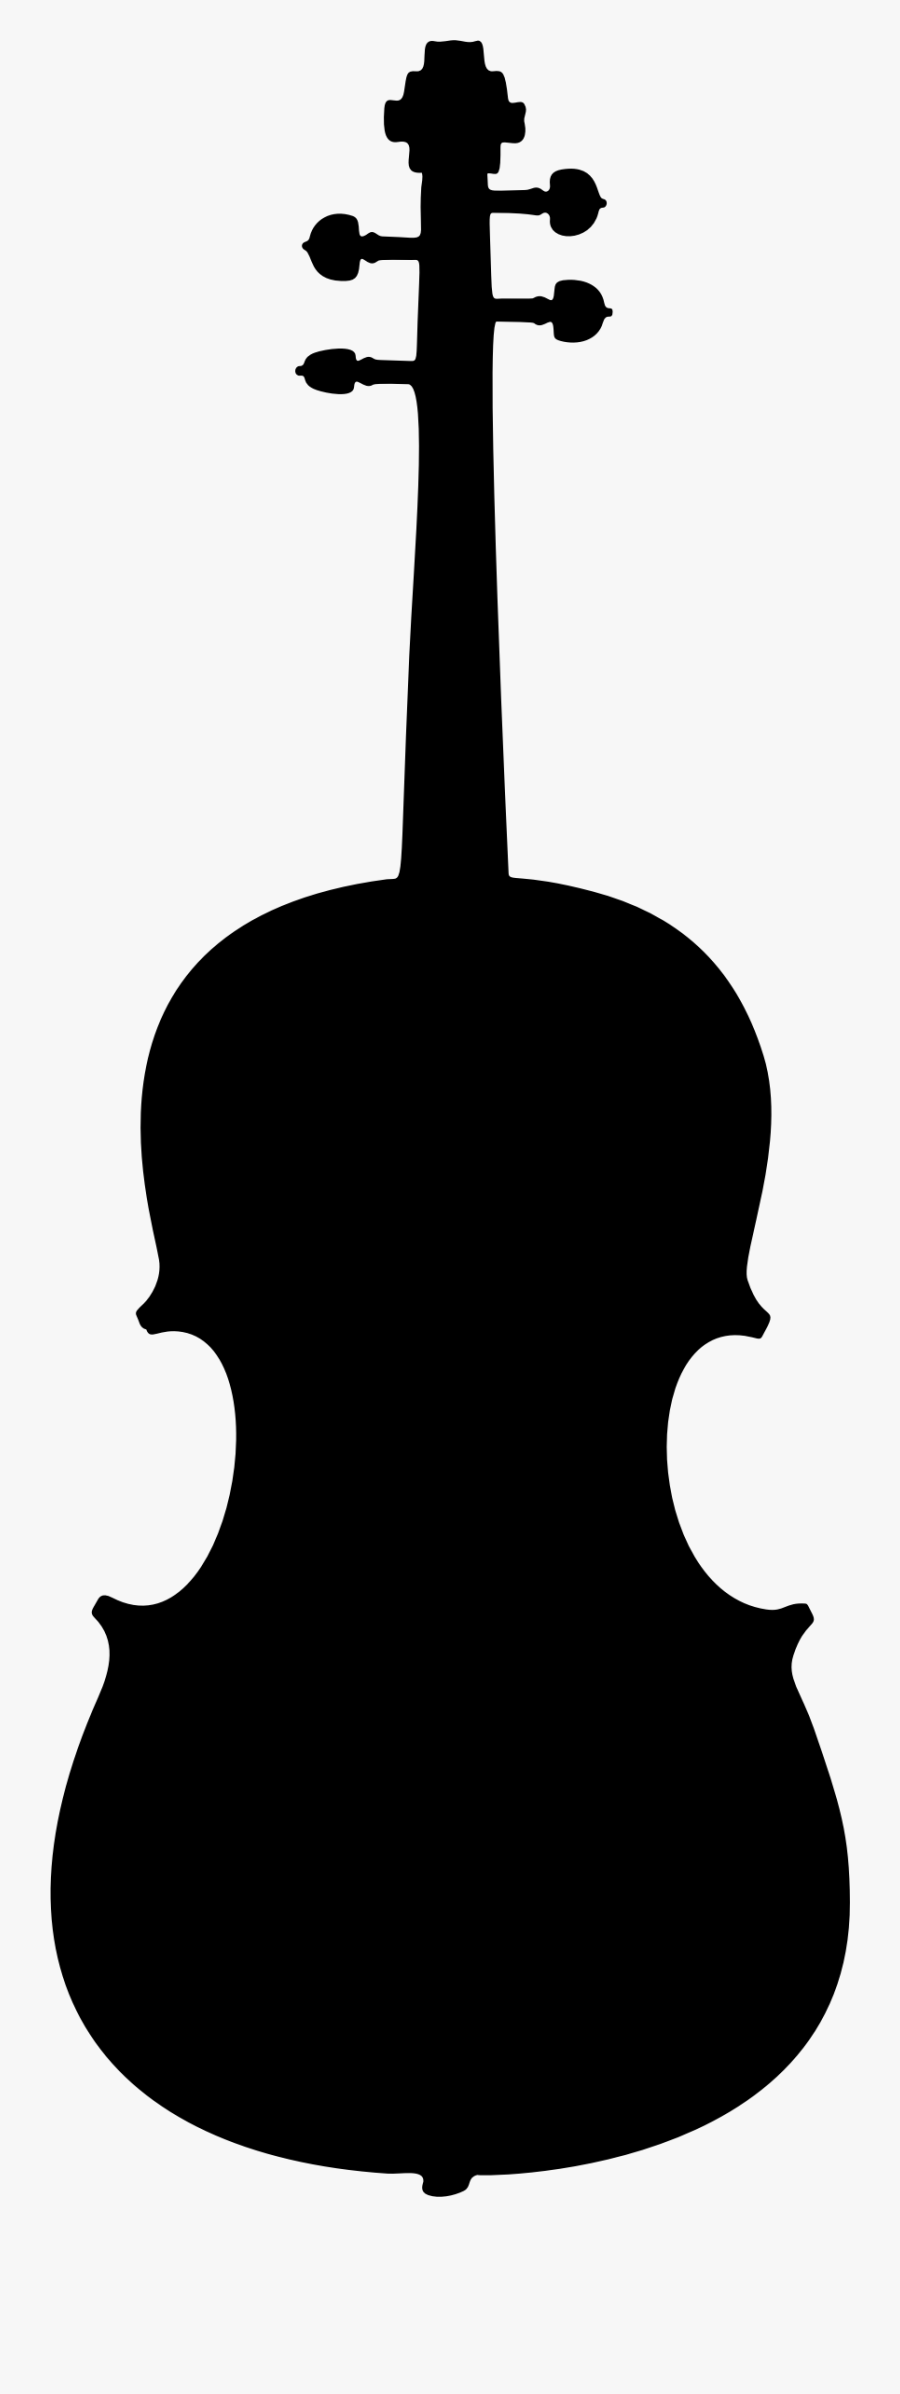 Clip Art Clipart Detailed Violin Big - Violin Silhouette Clip Art, Transparent Clipart